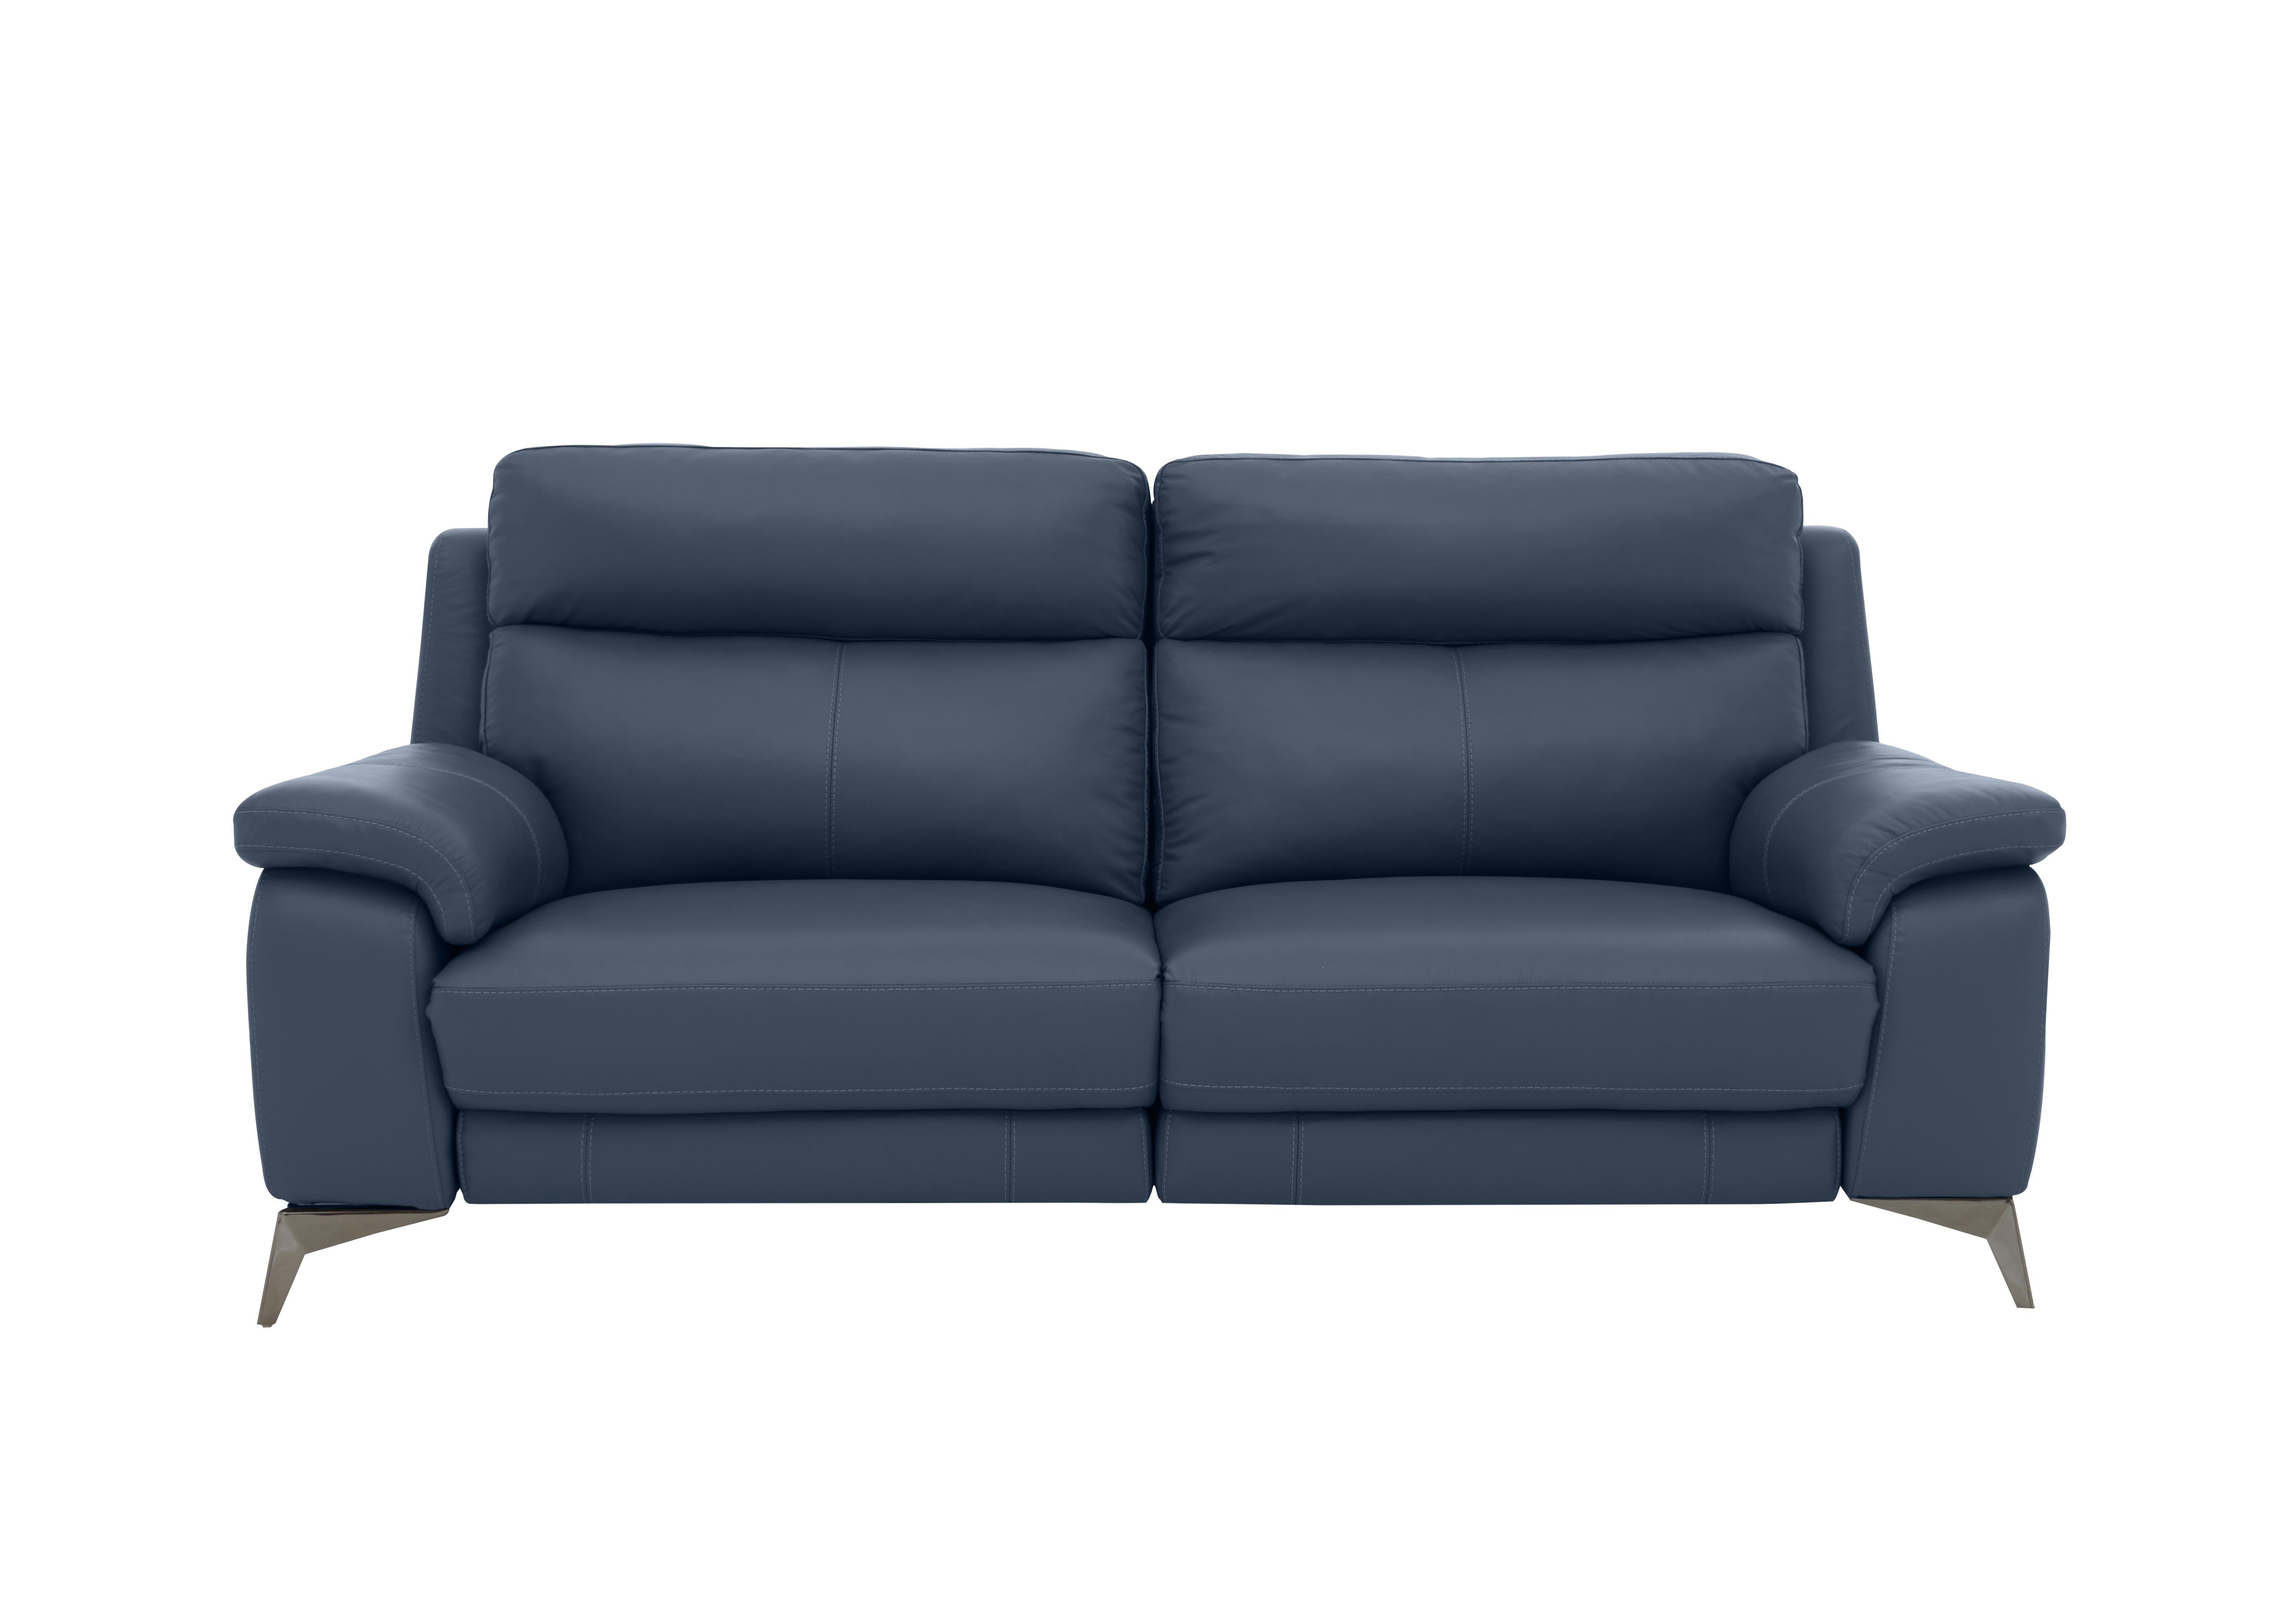 Missouri 3 Seater Leather Sofa in Bv-313e Ocean Blue on Furniture Village